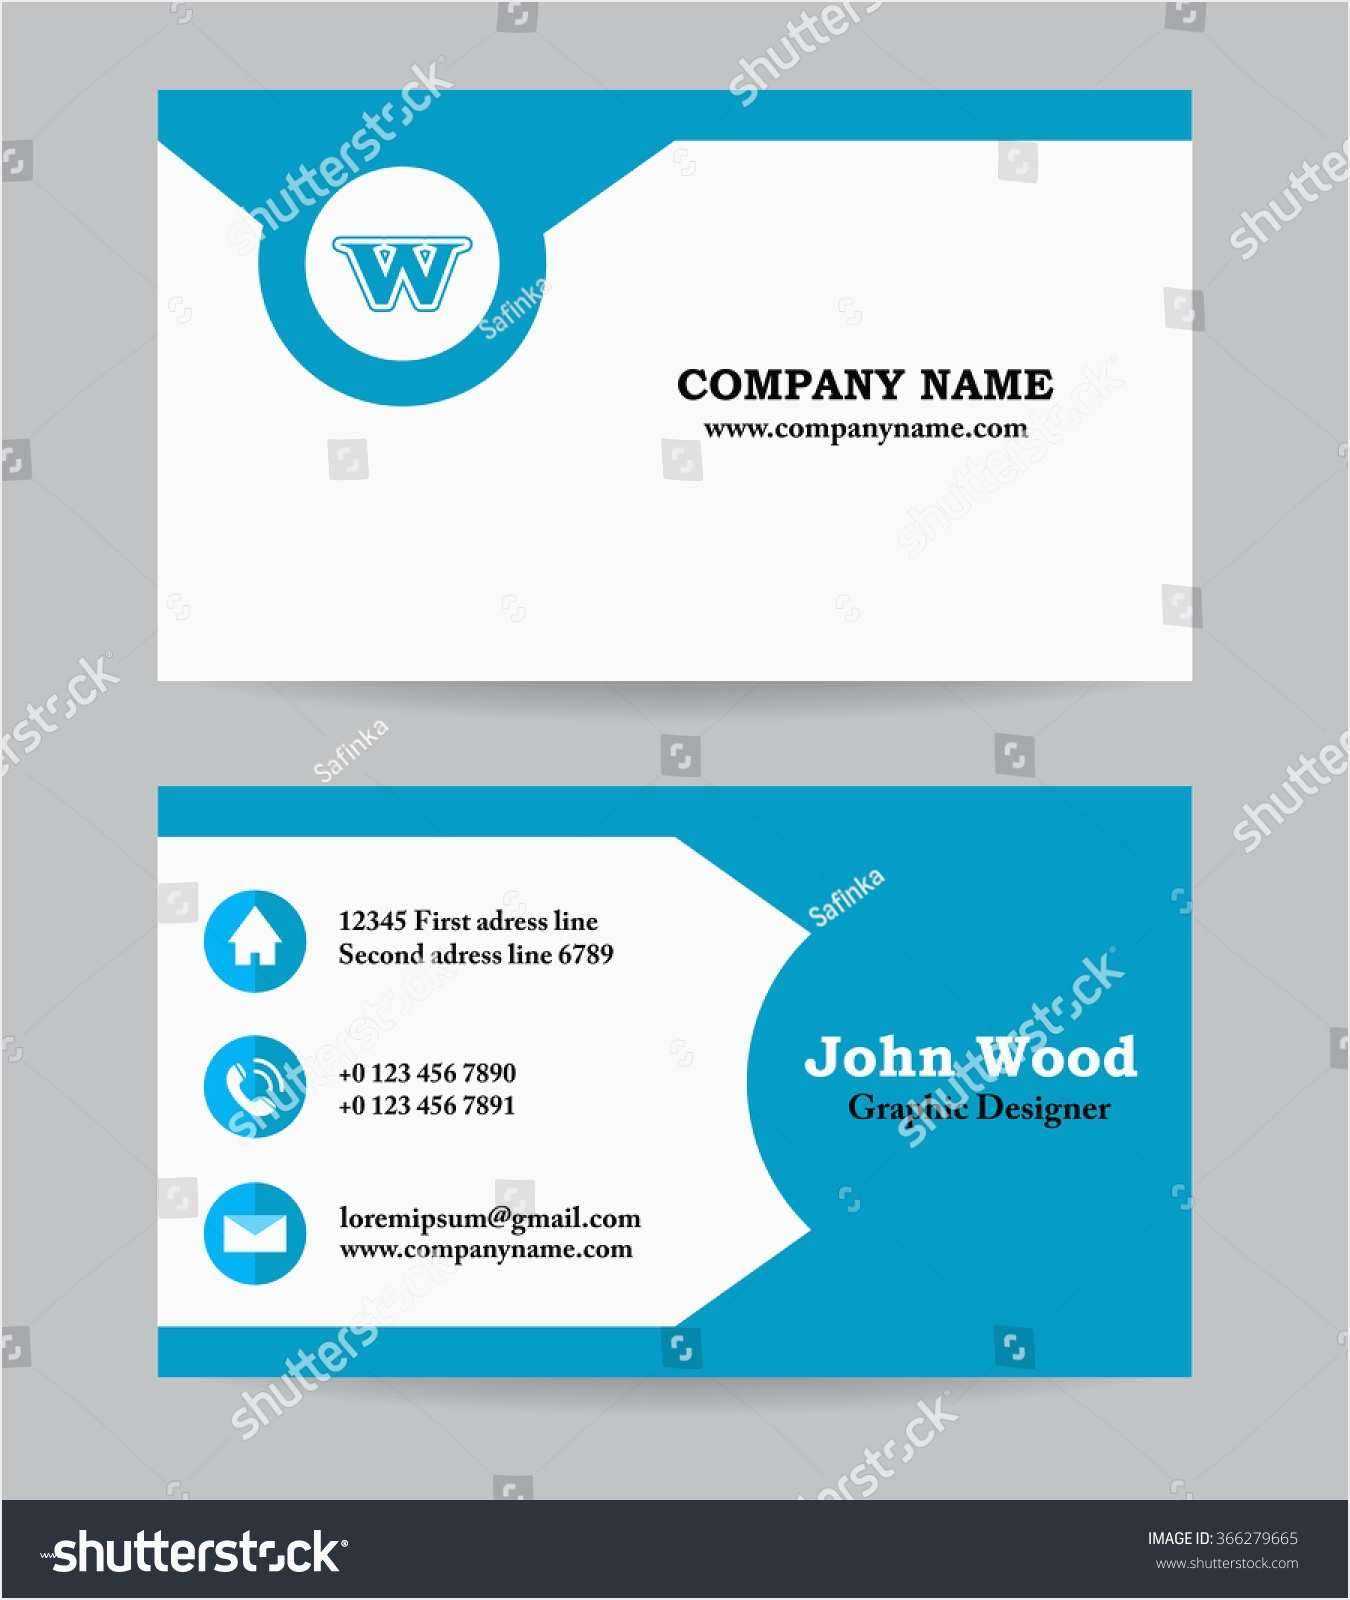 Ibm Business Card Template - Caquetapositivo With Ibm Business Card Template